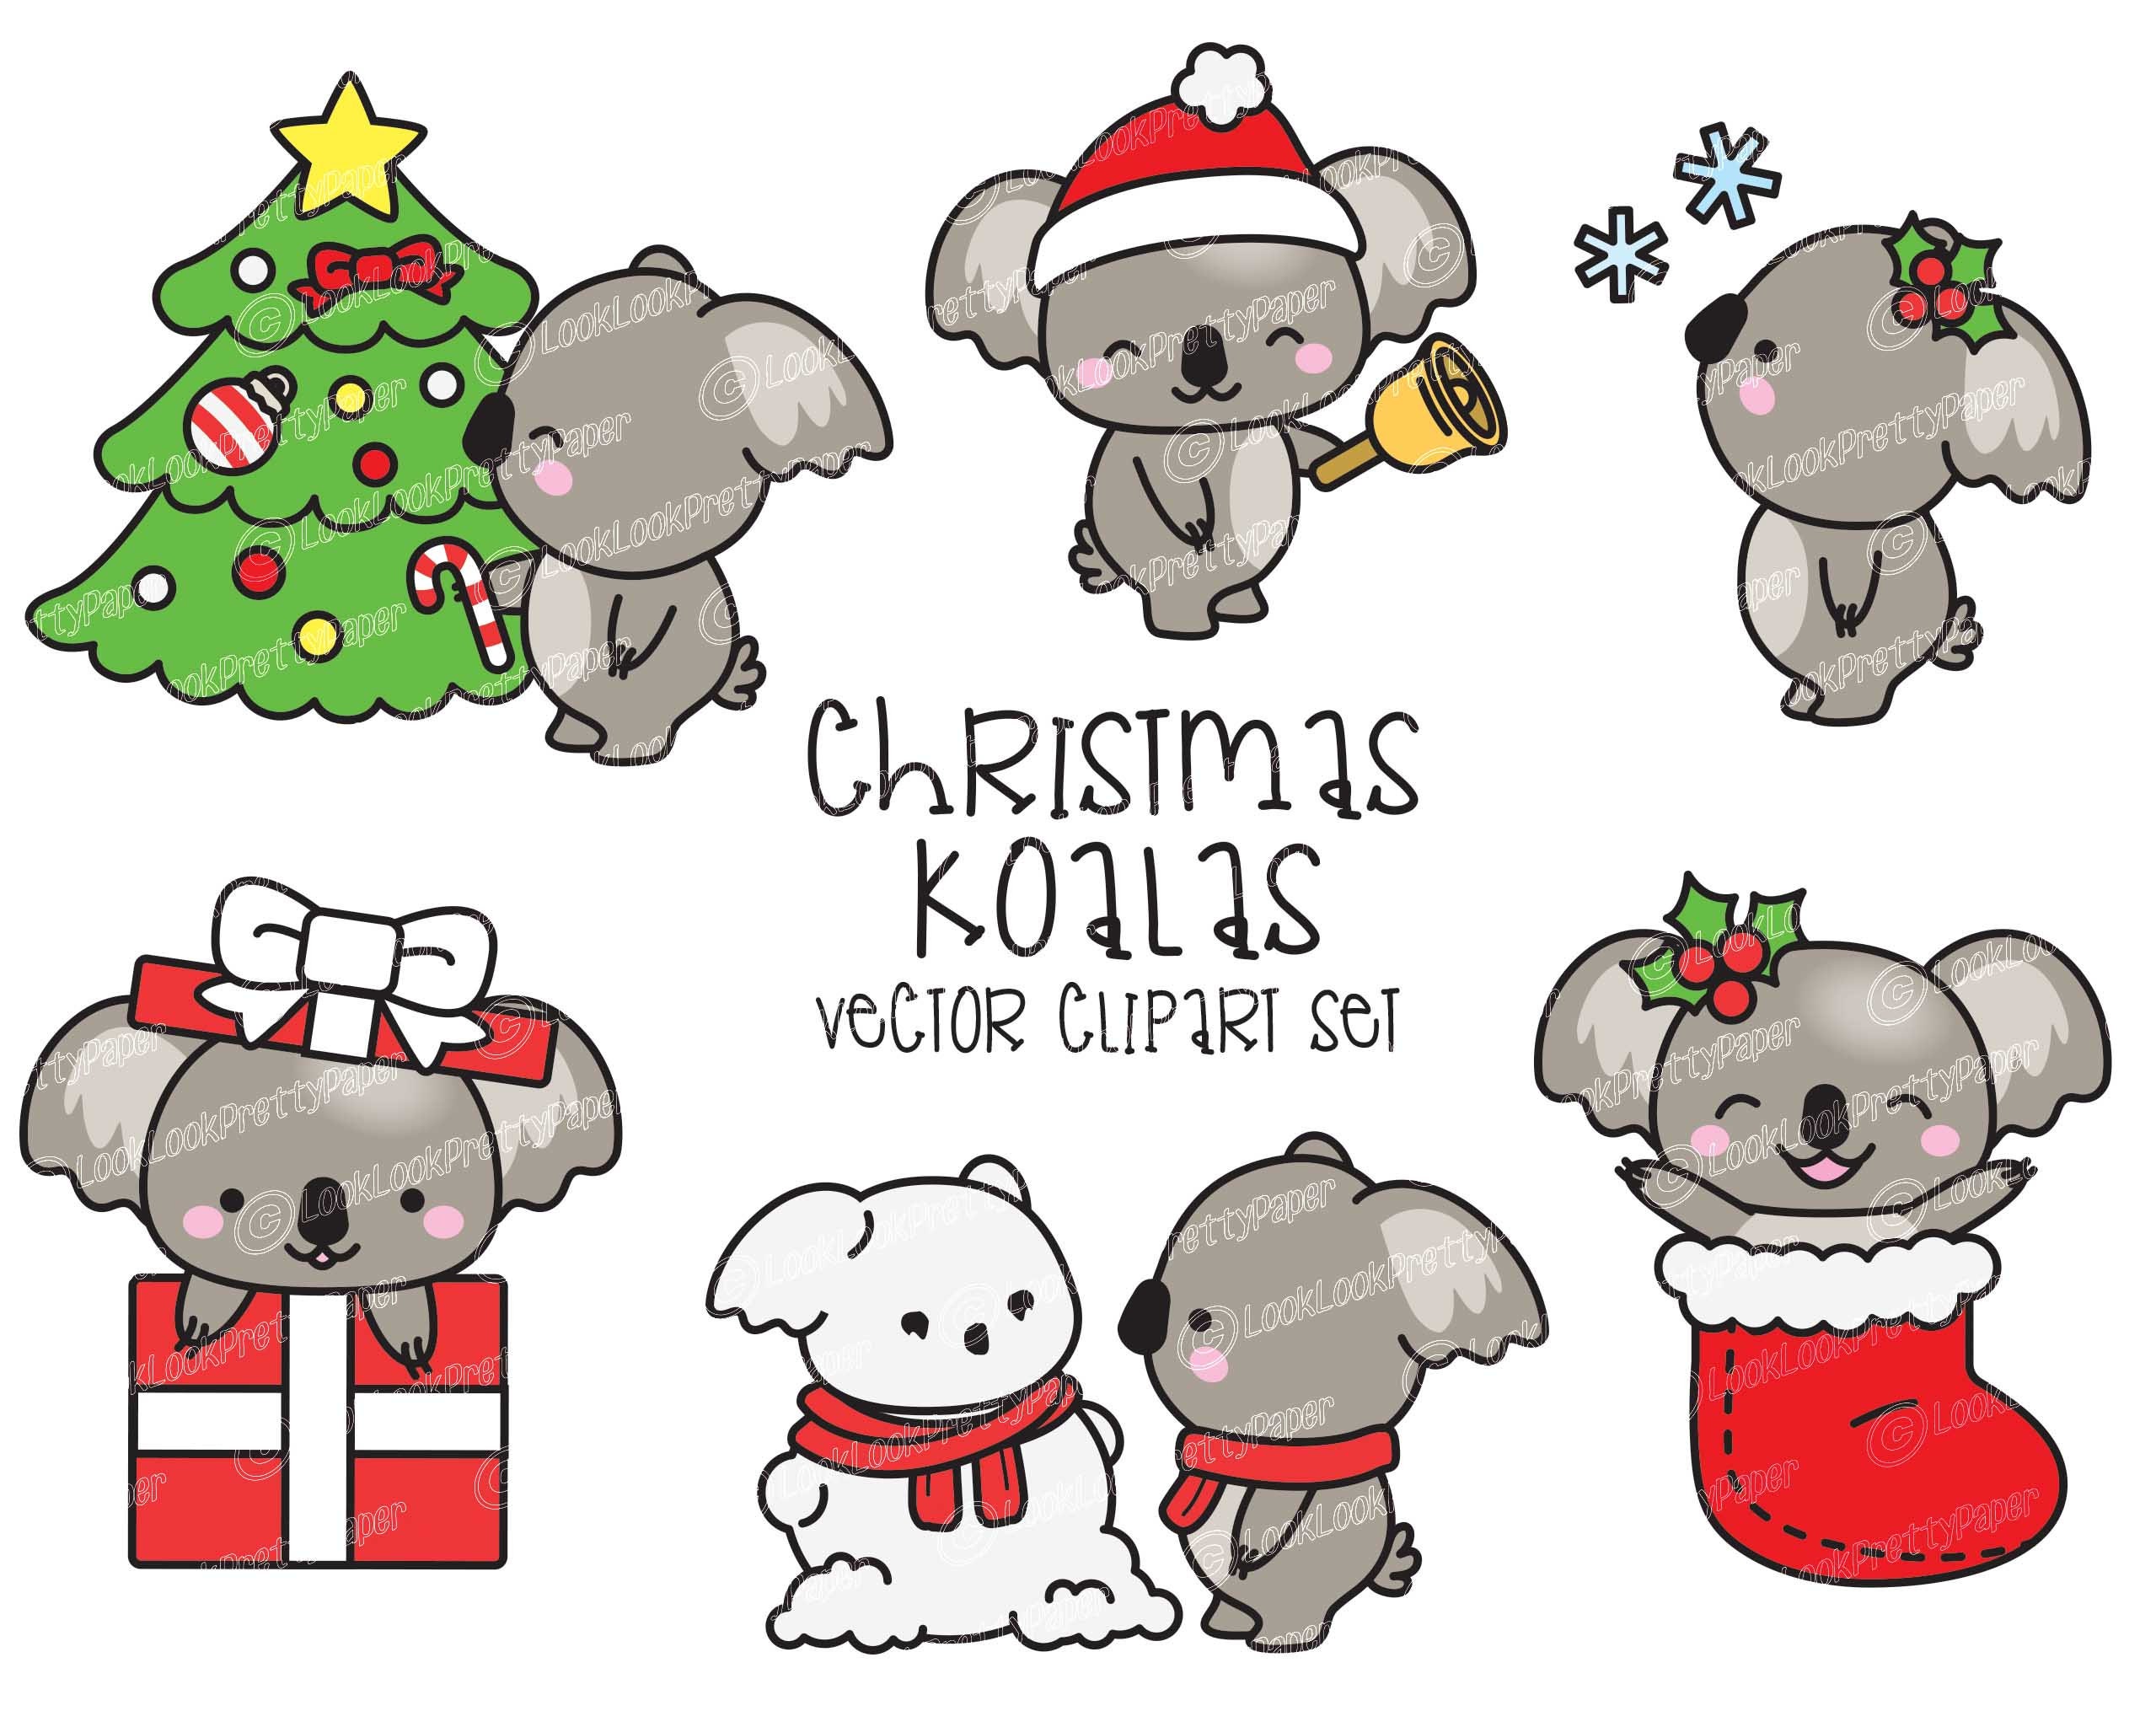 Cute Christmas: Things To Make - Super Cute Kawaii!!